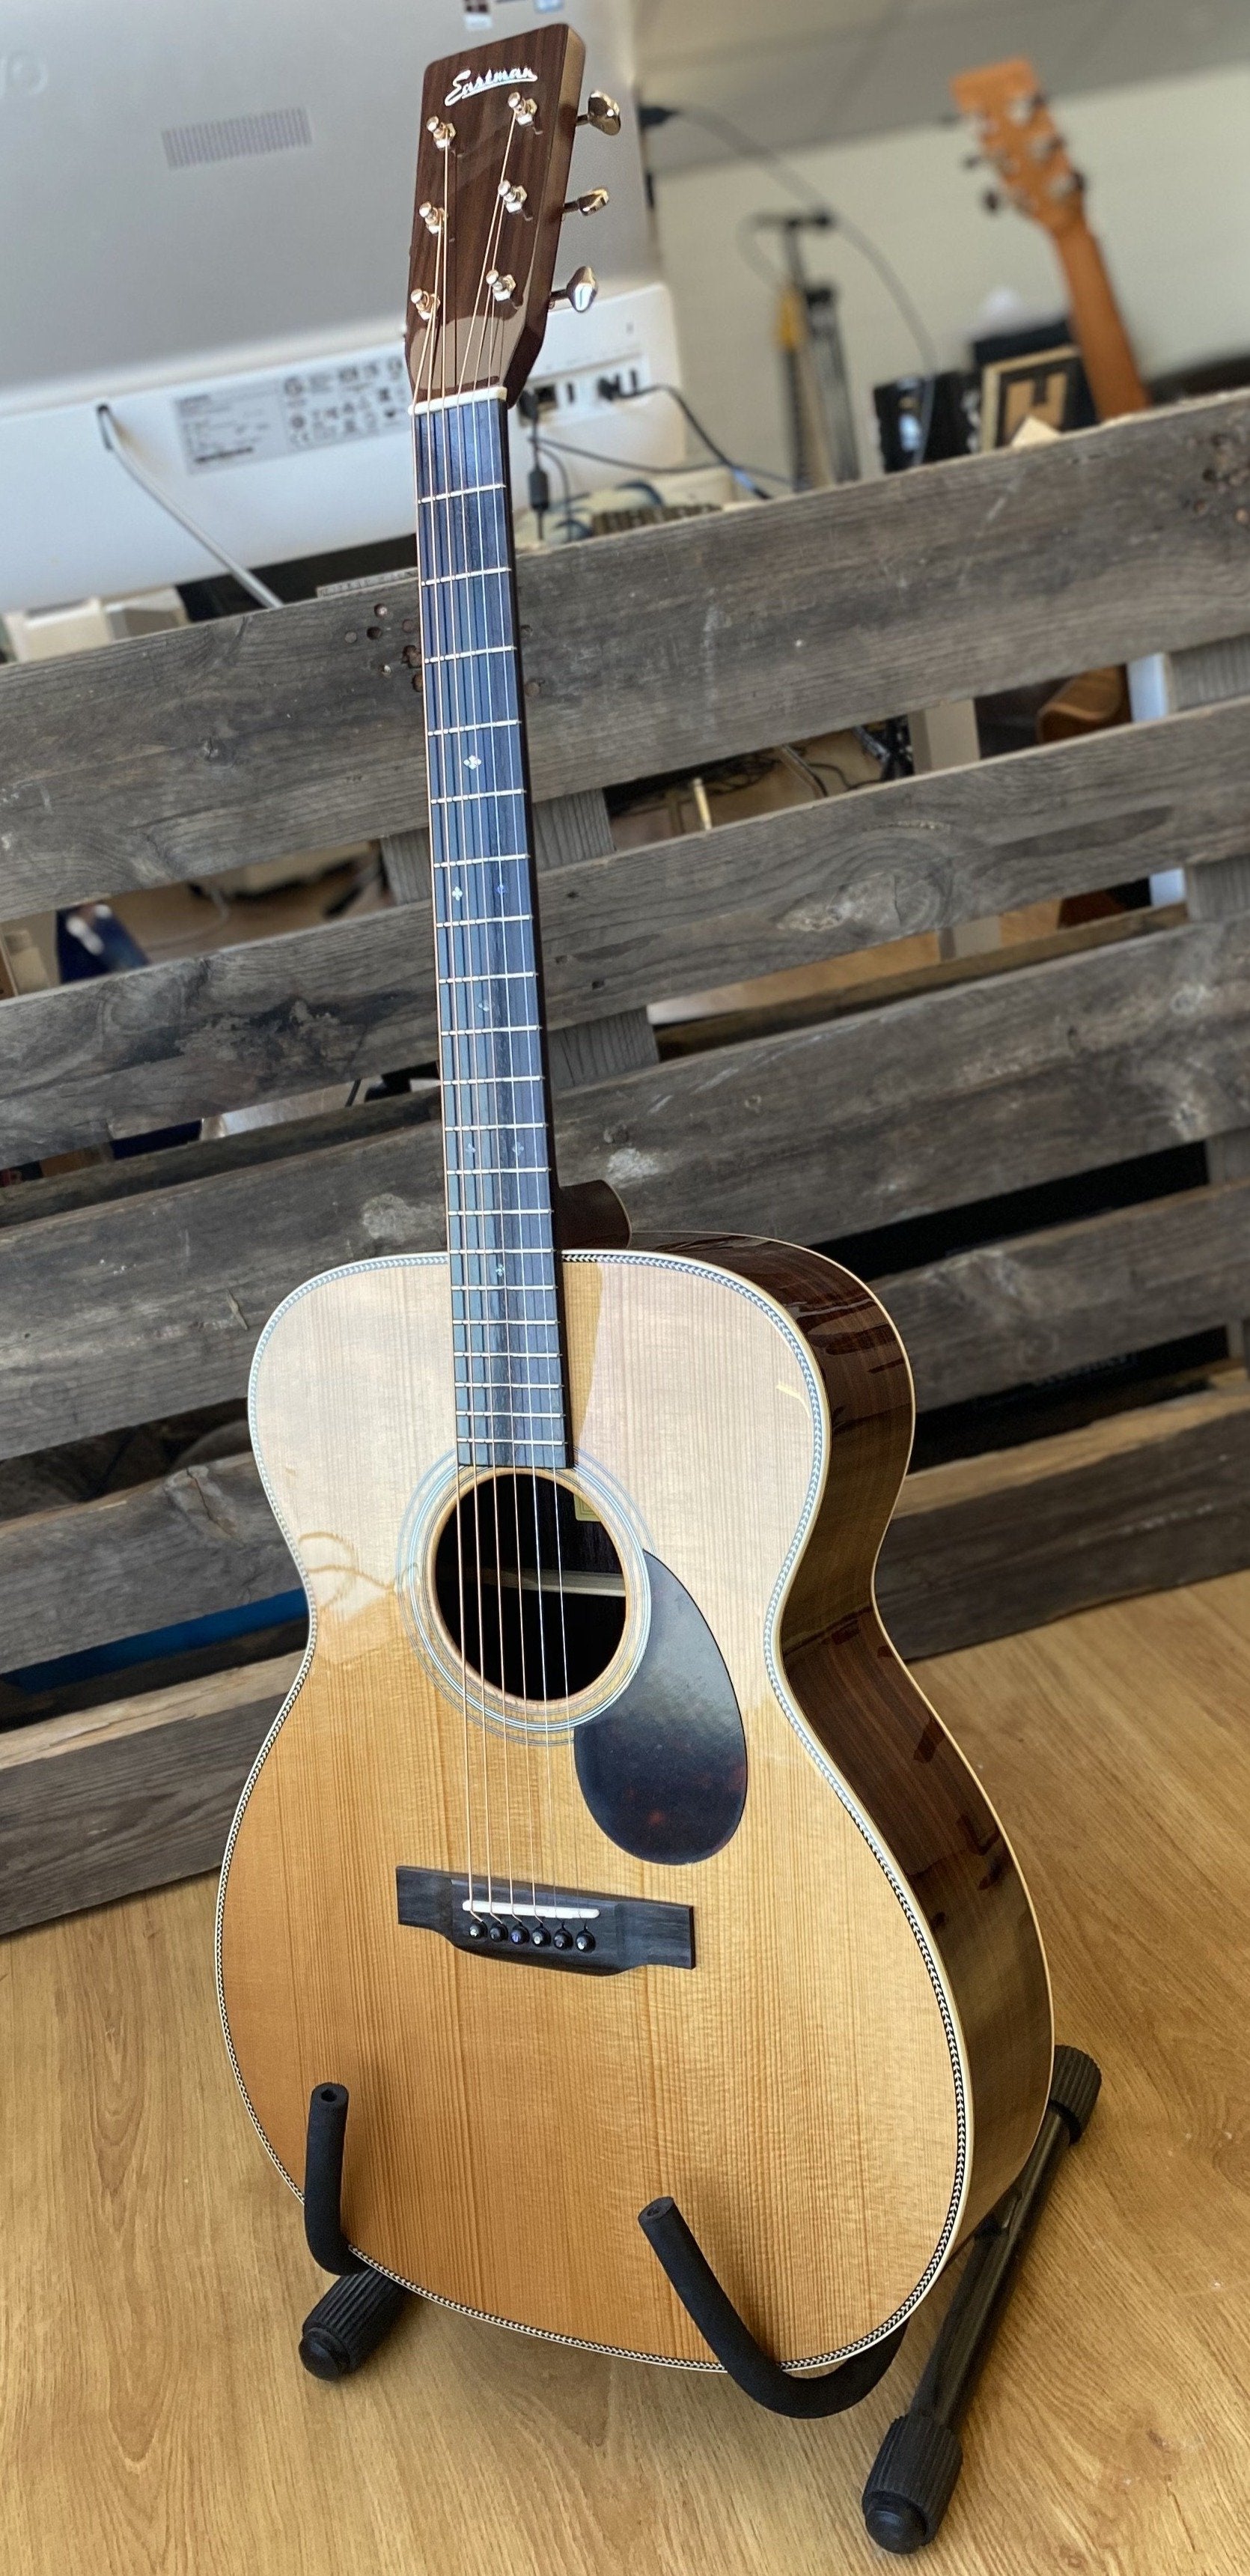 Eastman E20 OM TC Orchestra model, Acoustic Guitar for sale at Richards Guitars.